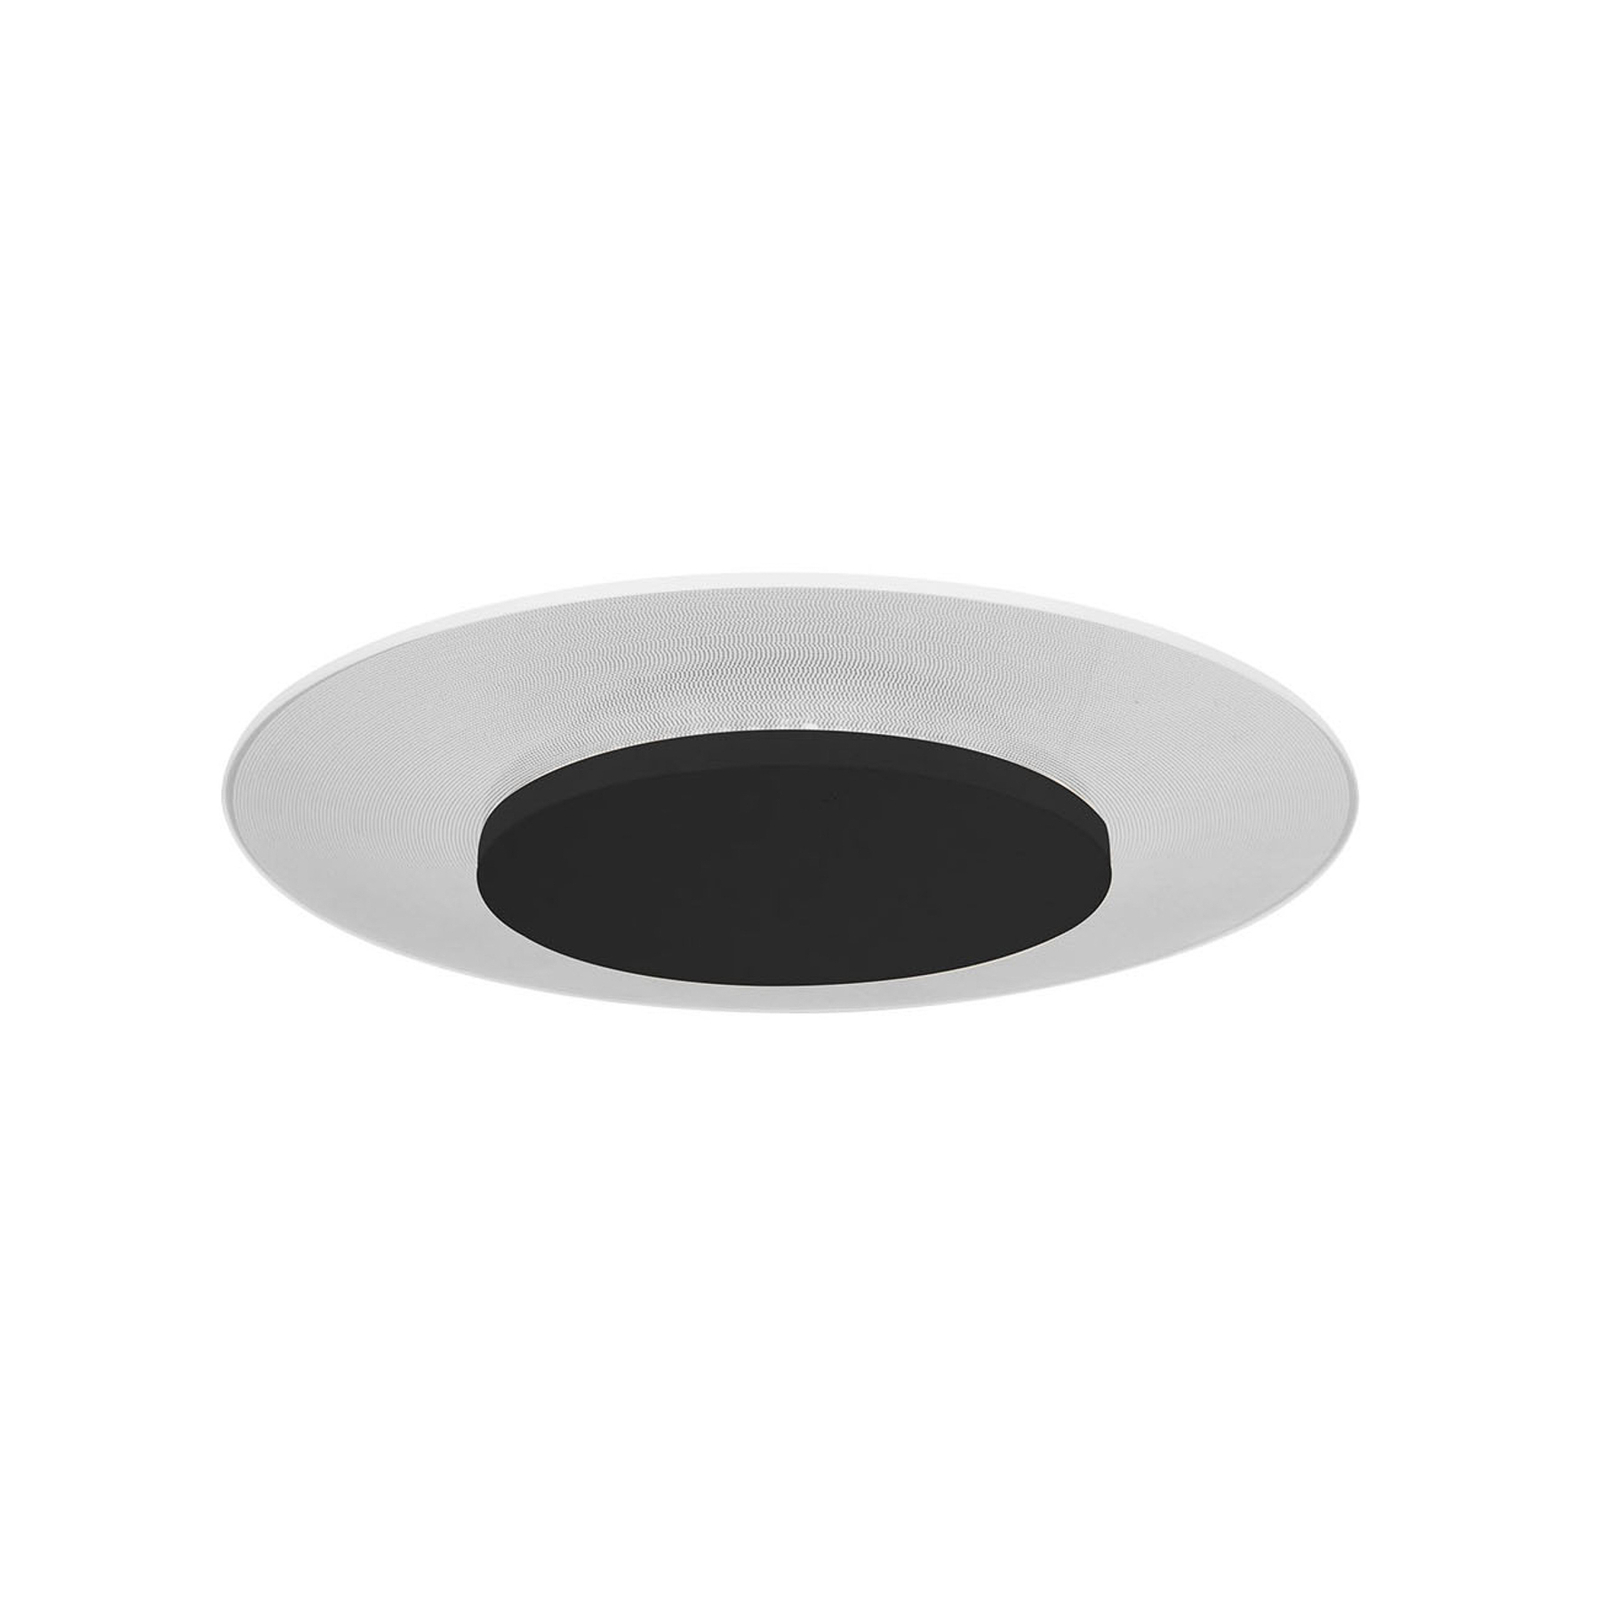 Lampa sufitowa LED Lido, czarna, Ø 36 cm